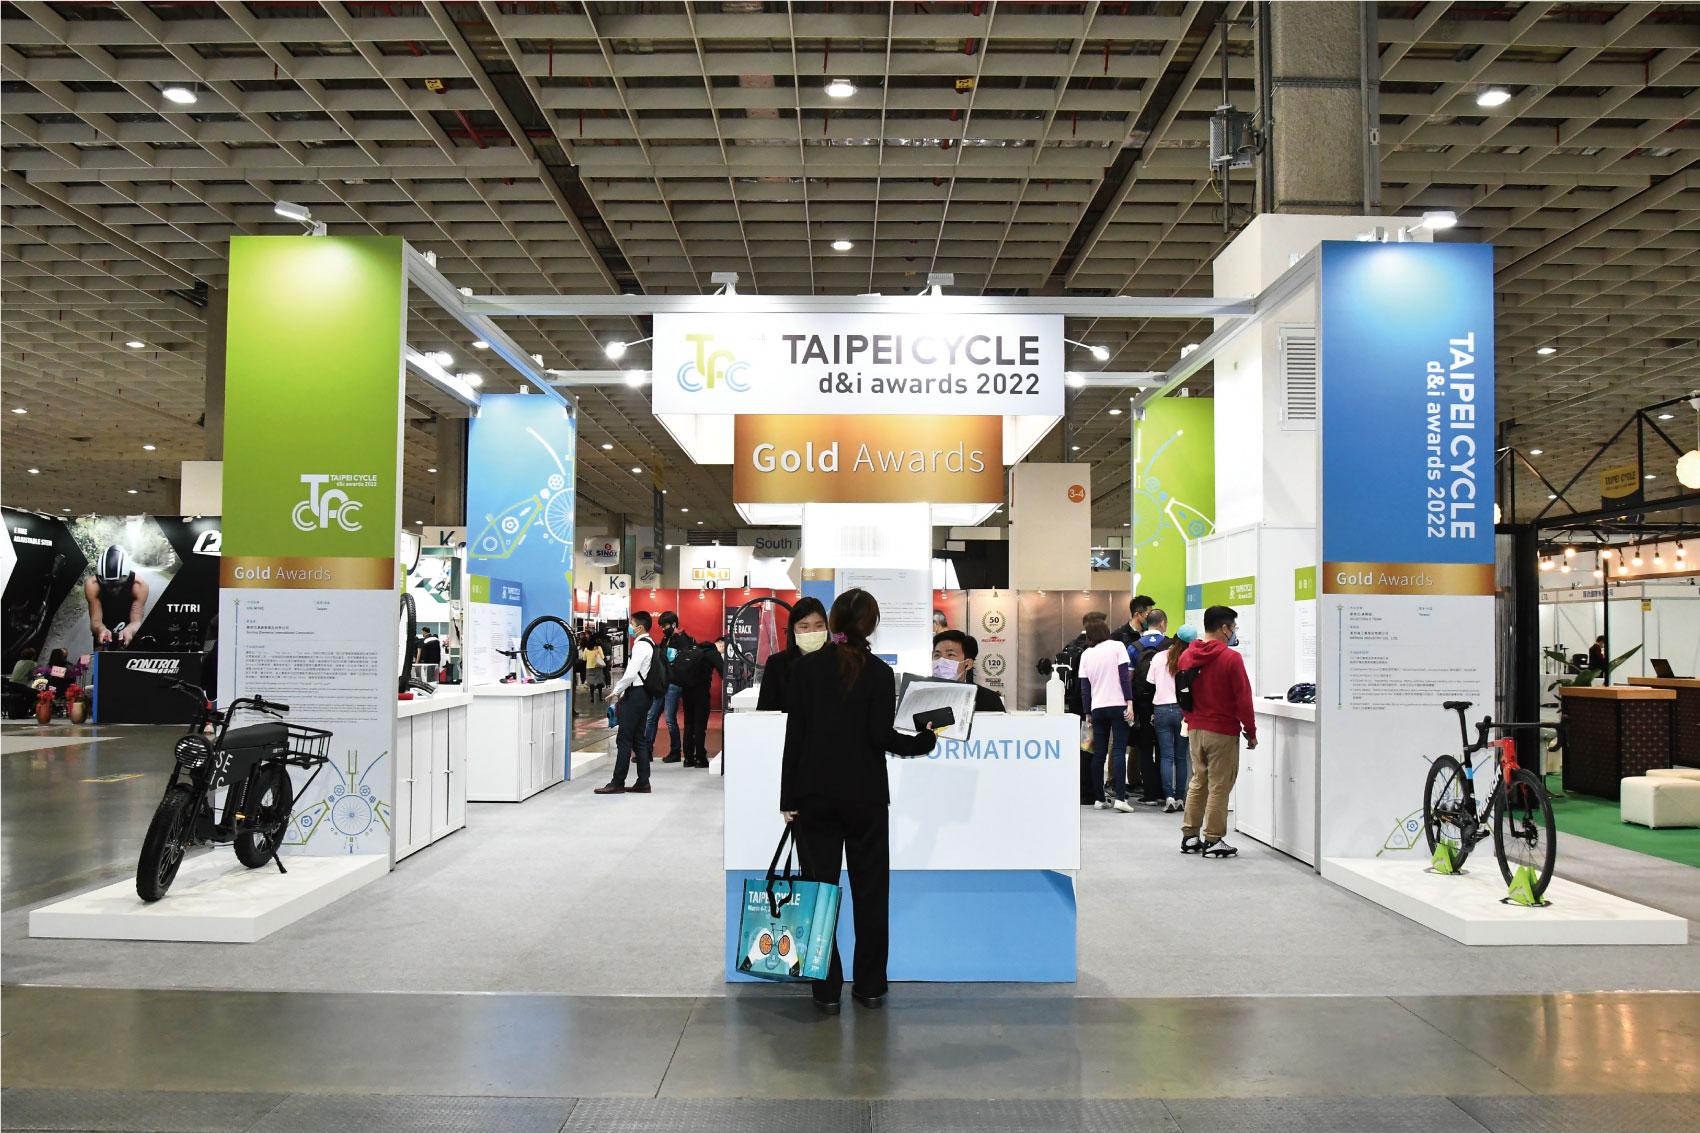 Taipei Cycle 2023